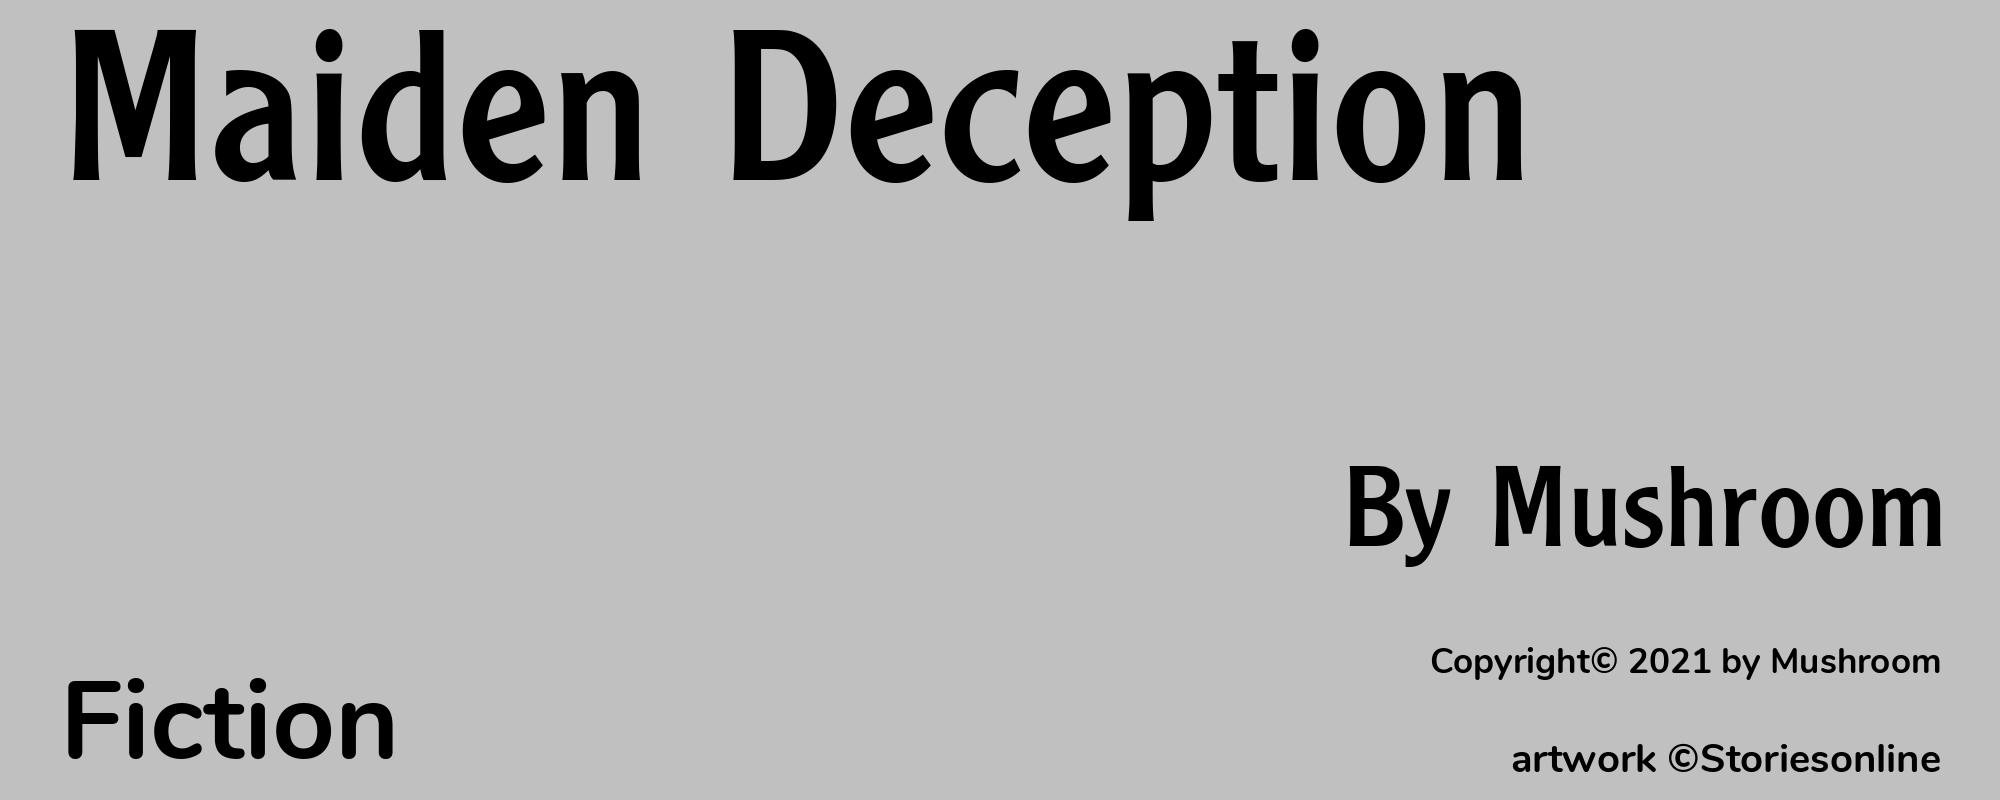 Maiden Deception - Cover